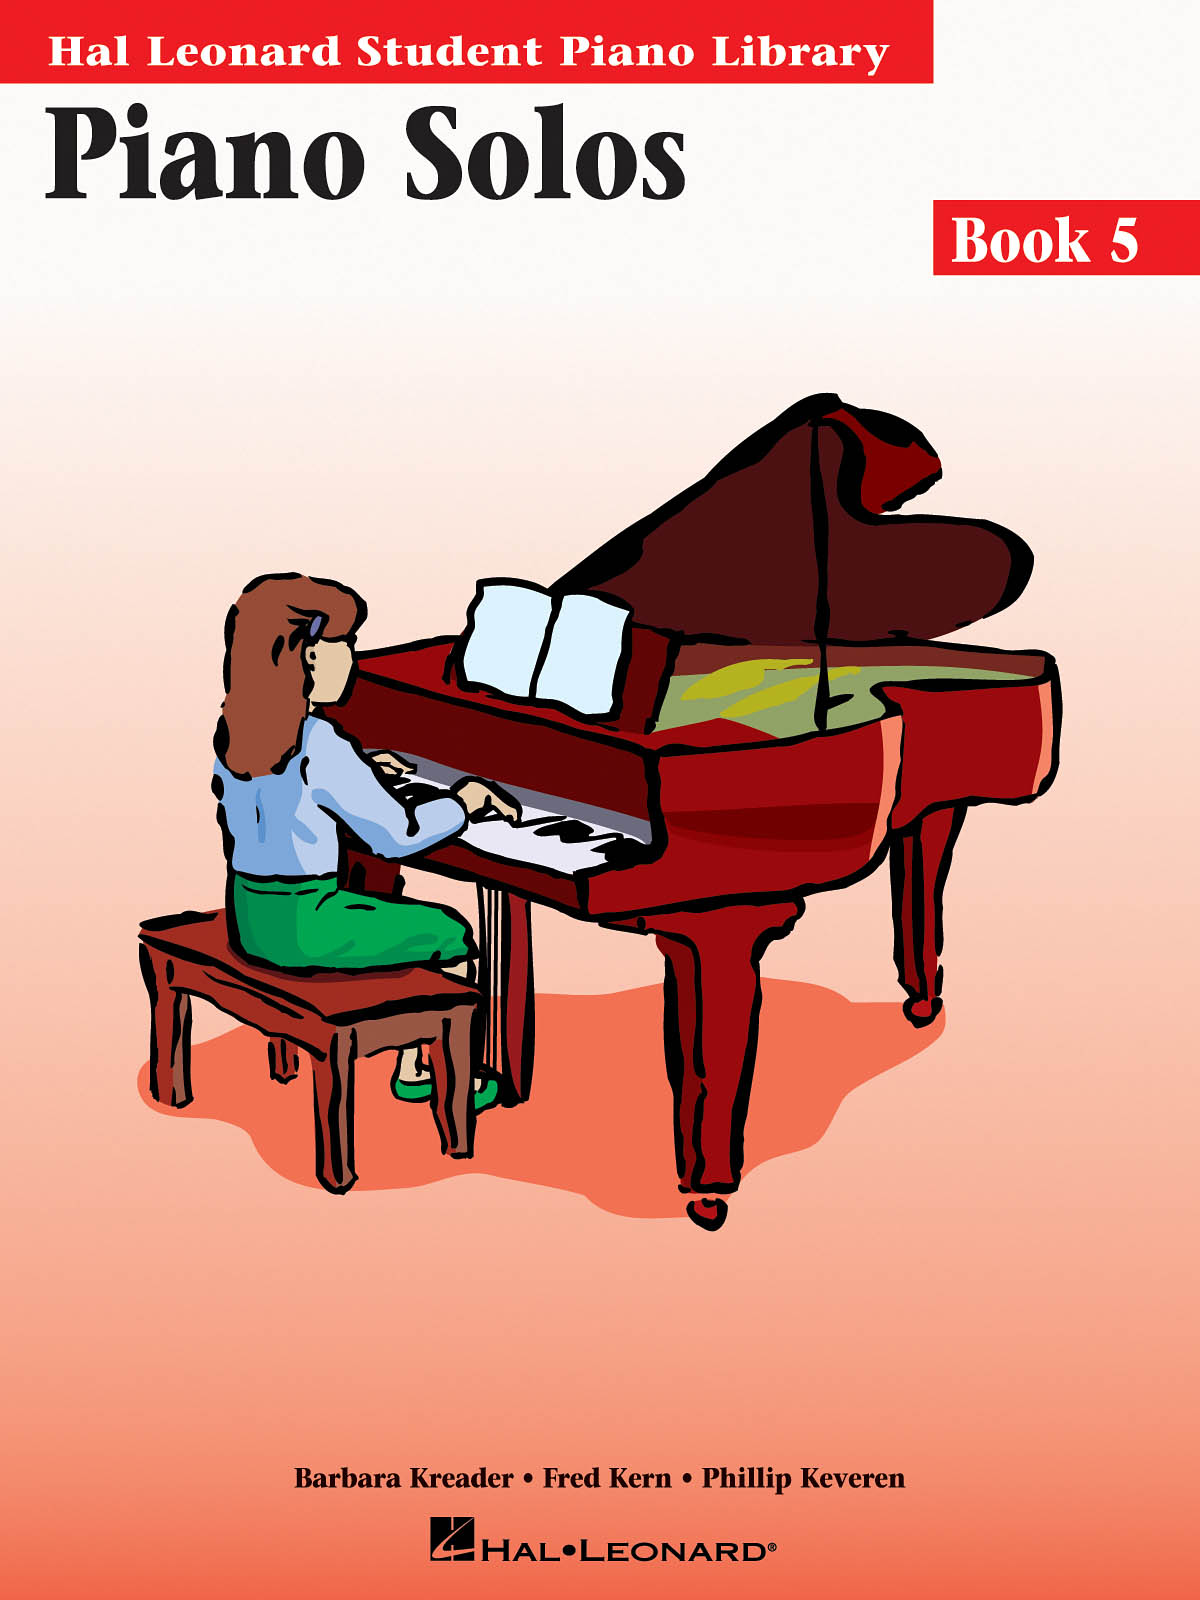 Hal Leonard Student Piano Library: Piano Solos Book 5